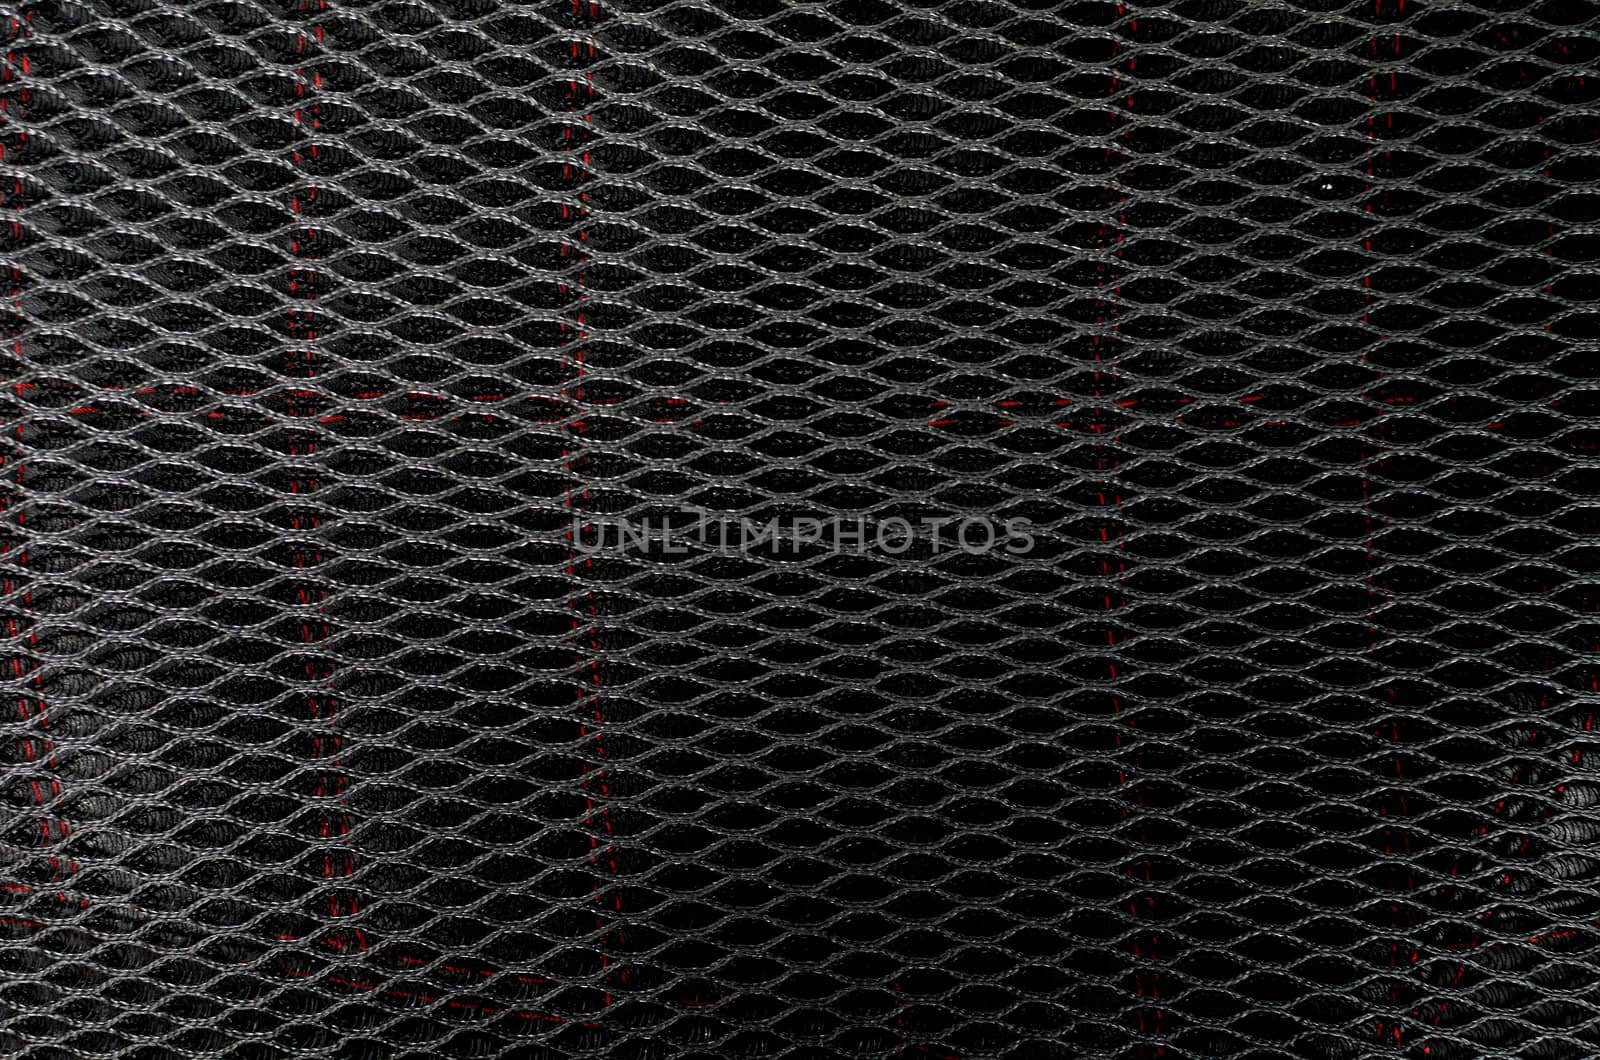 Fabric pattern background by pixbox77